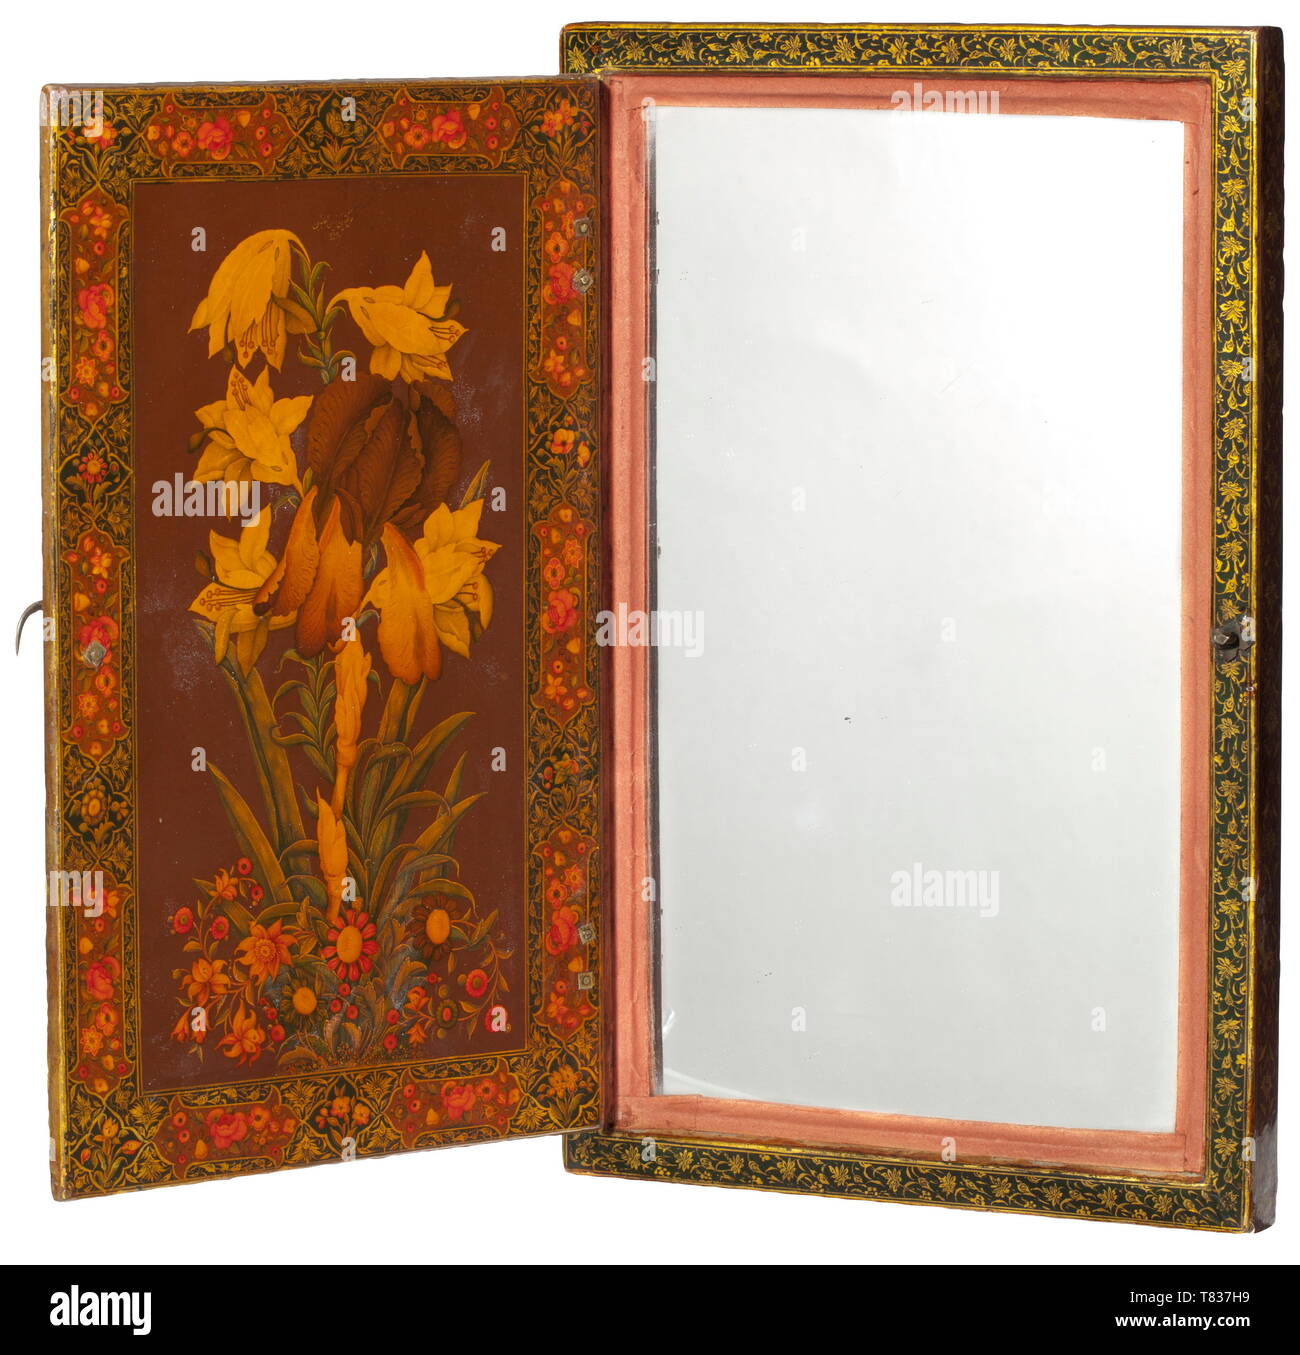 Paper Mache Floral Mirror Frame